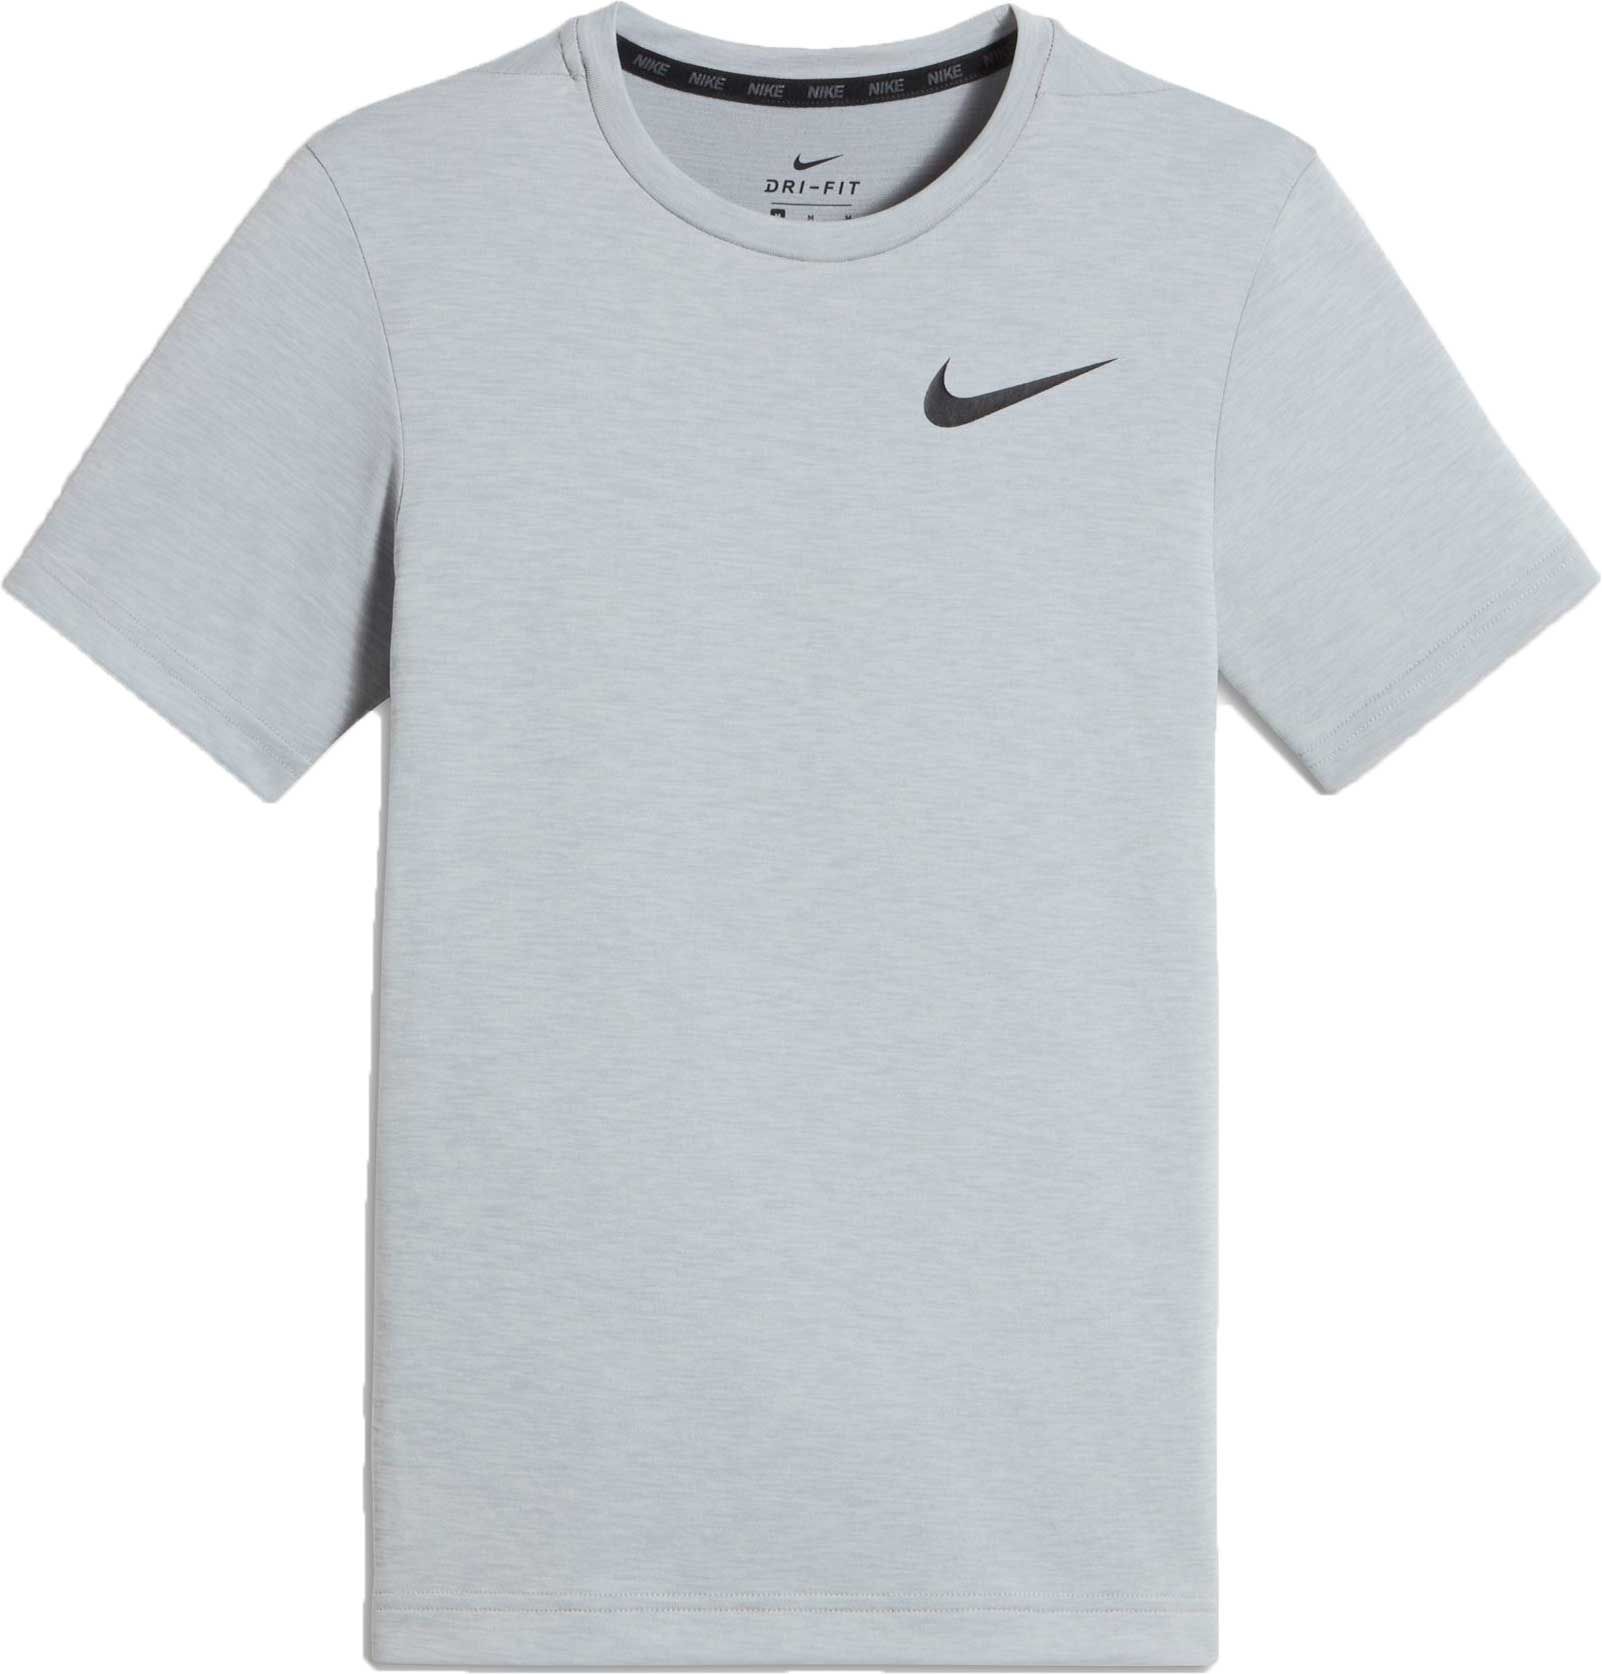 Boys' Shirts & Tops | DICK'S Sporting Goods